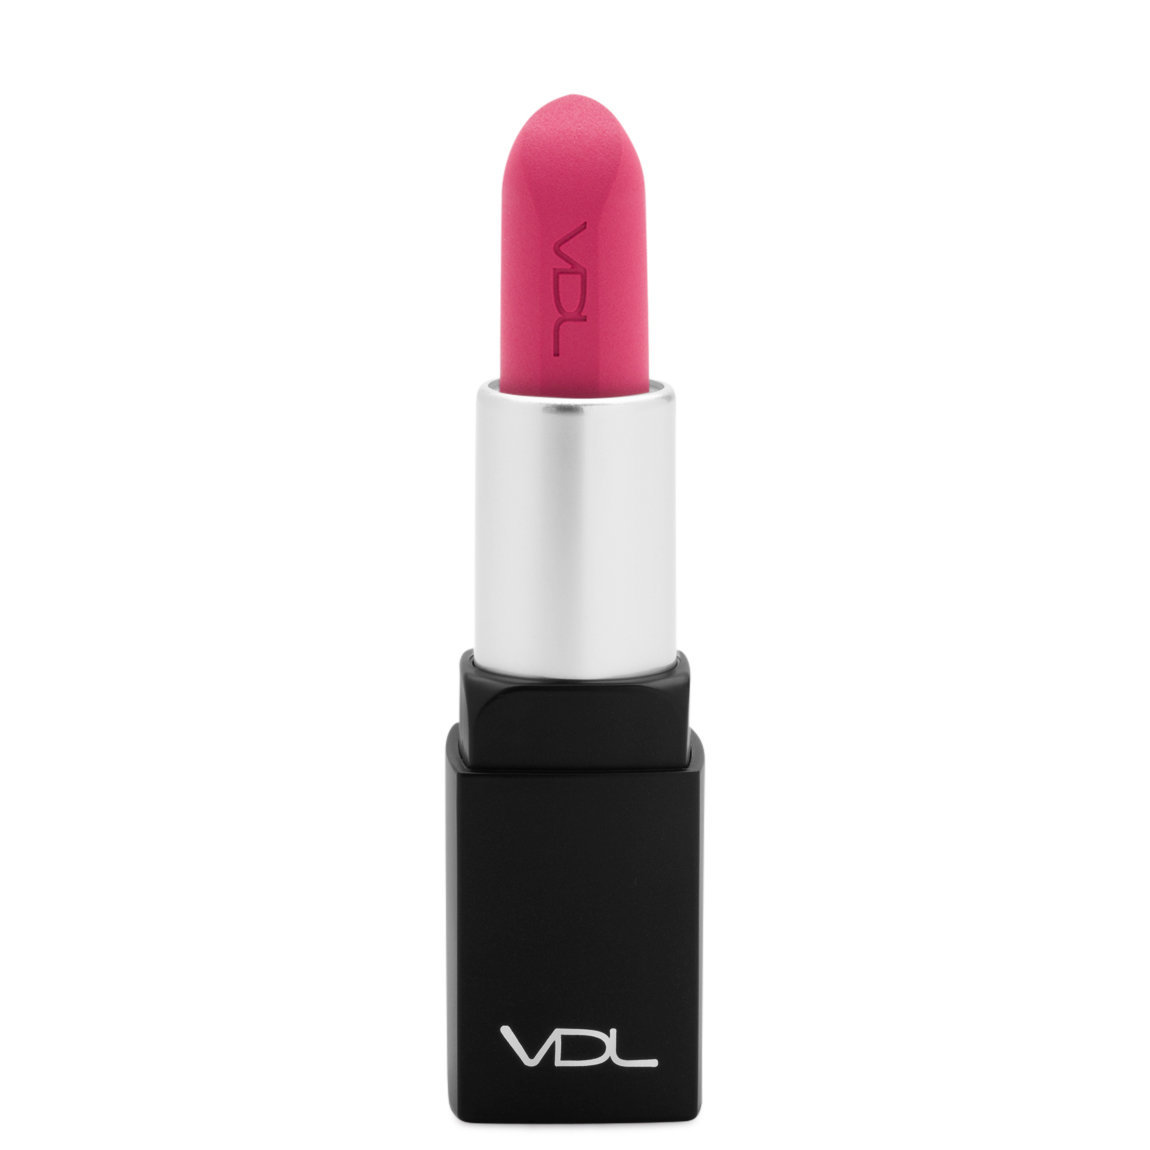 VDL Expert Color Real Fit Velvet Lipstick 101 Claret alternative view 1.